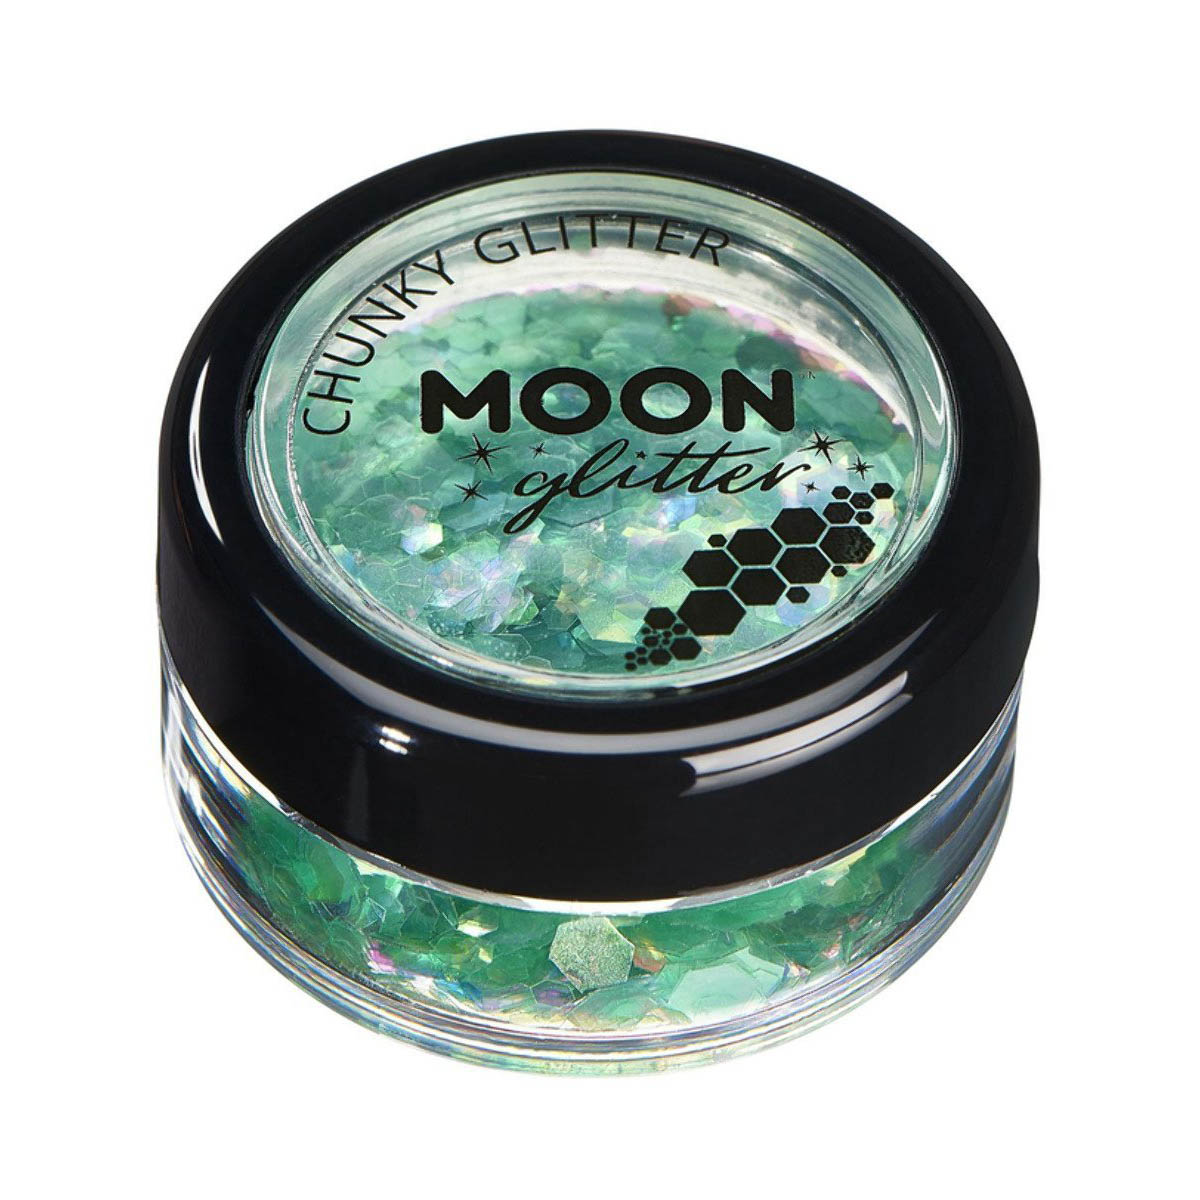 Moon kroppsglitter, iriserande chunky 5g Grön